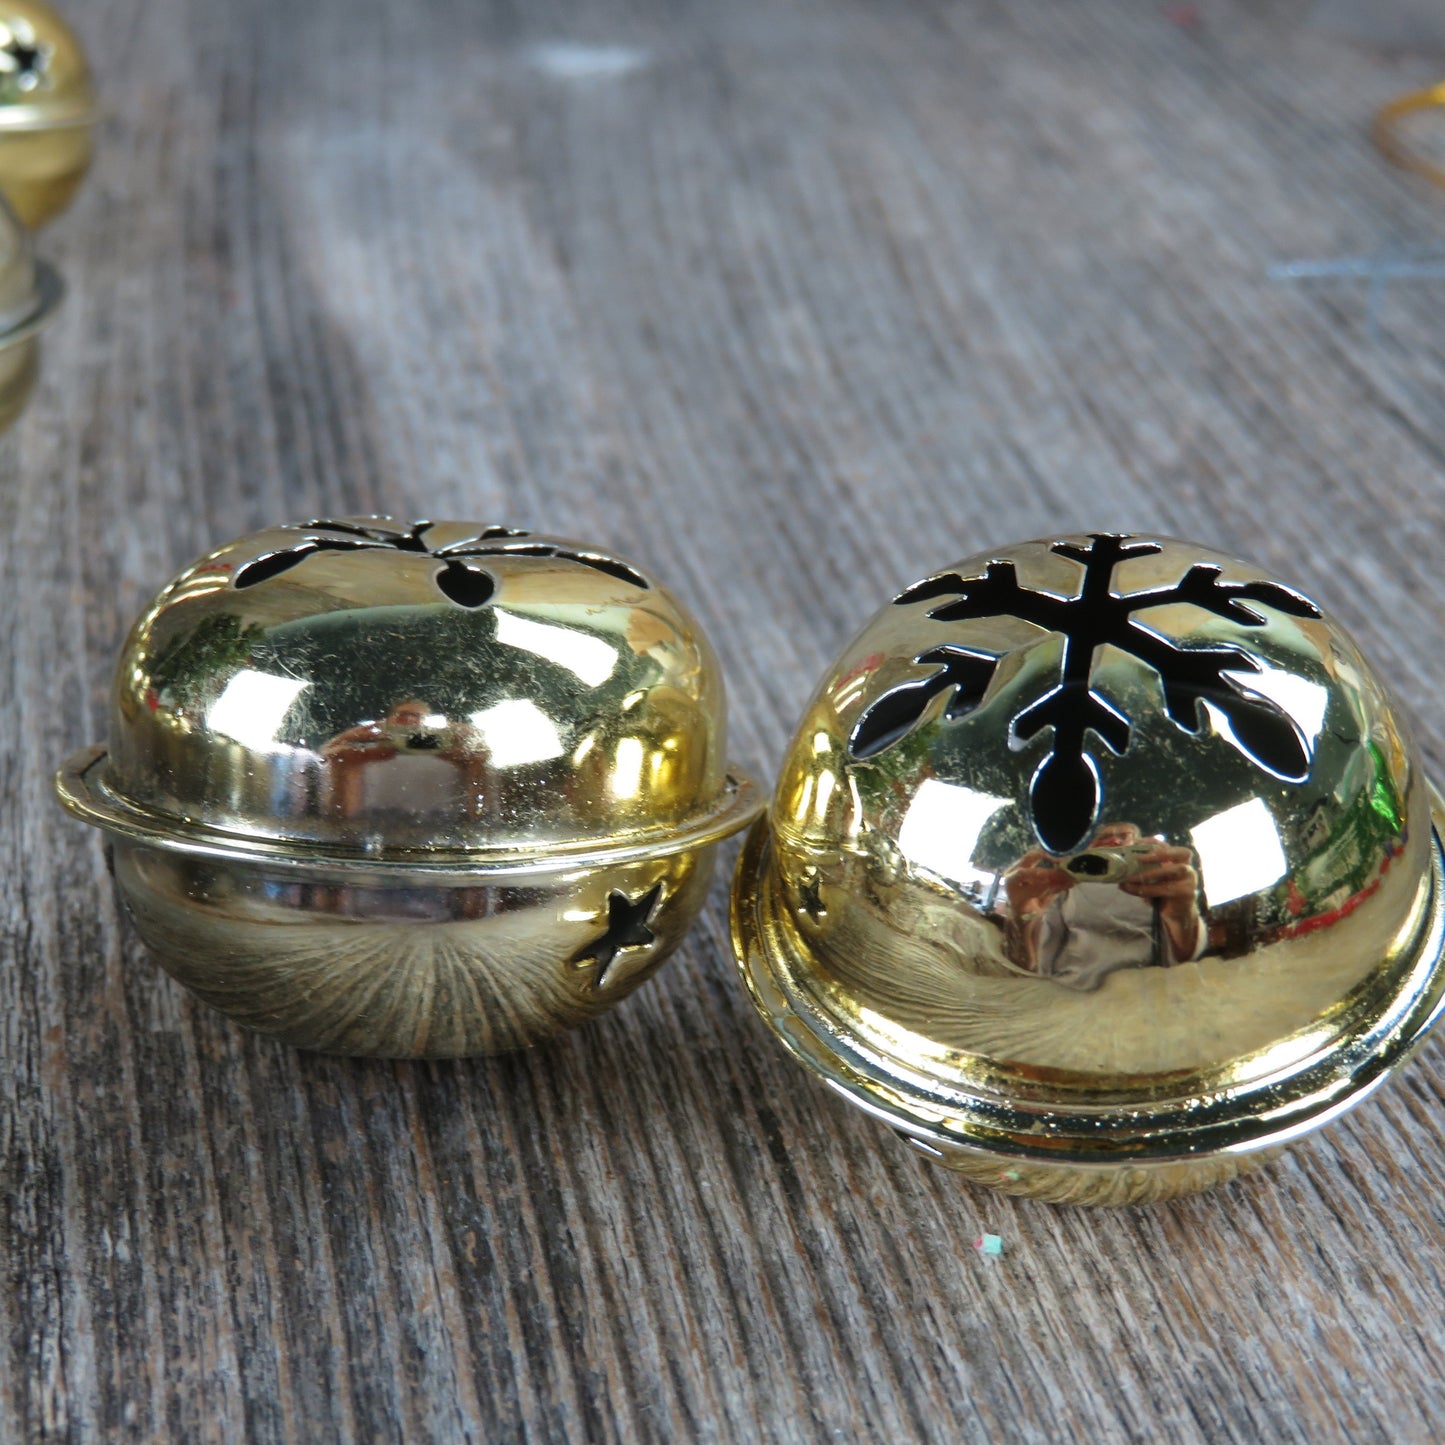 Sleigh Jingle Bells Gold Round Snowflake Christmas Shiny Craft Bells Set of 9 Embellishment Bowl Filler